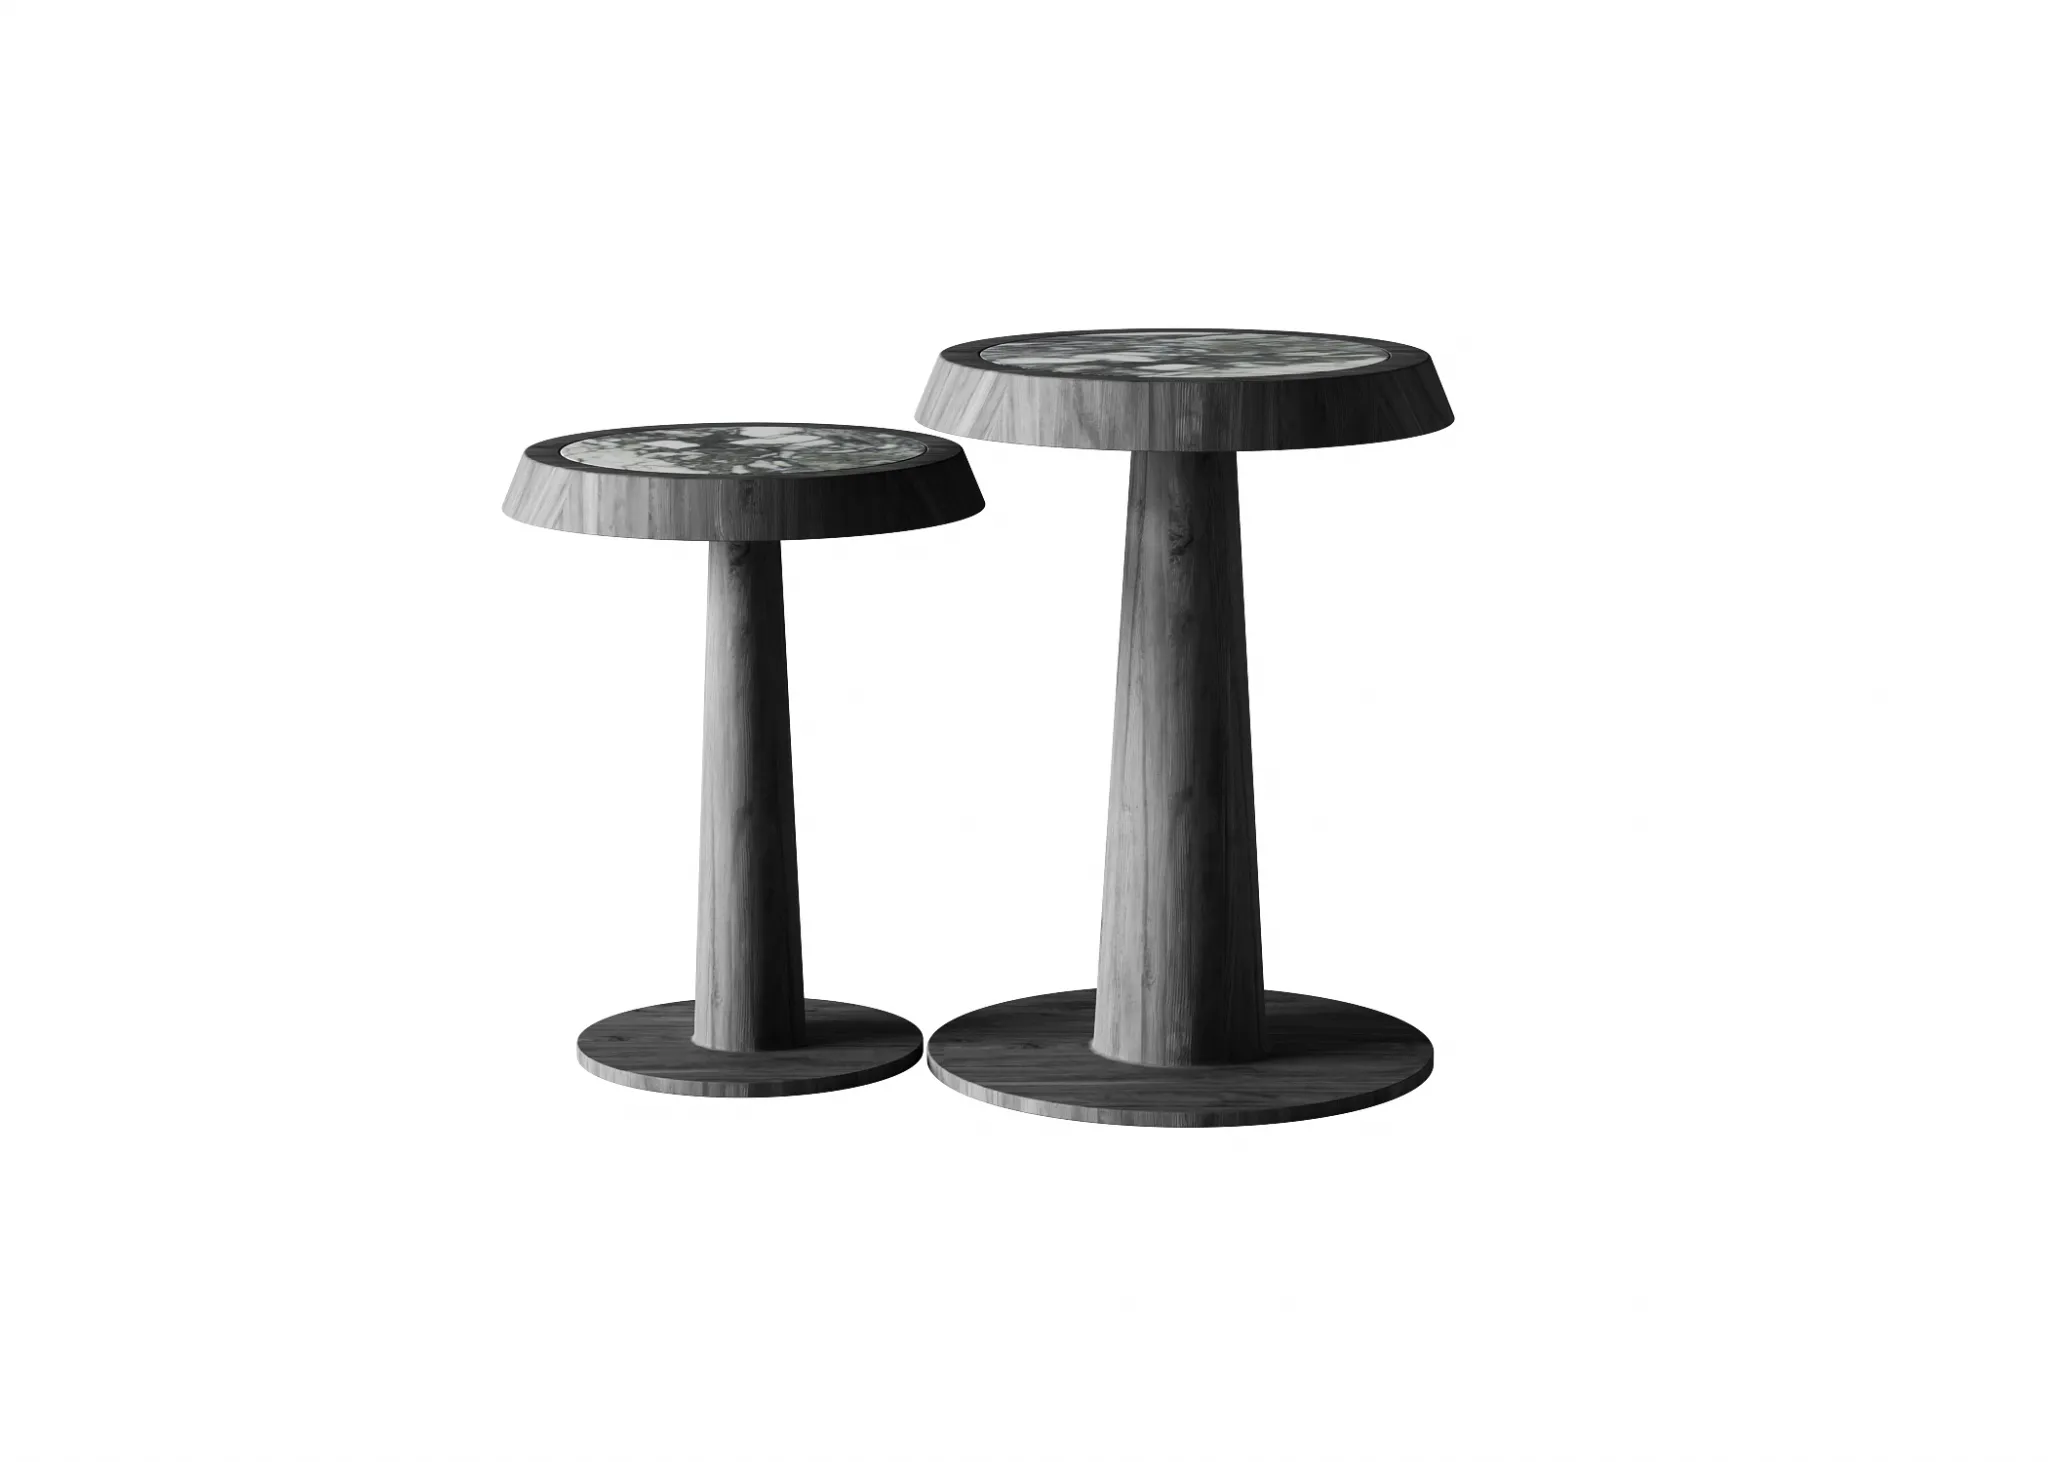 FURNITURE 3D MODELS – TABLES – 0292